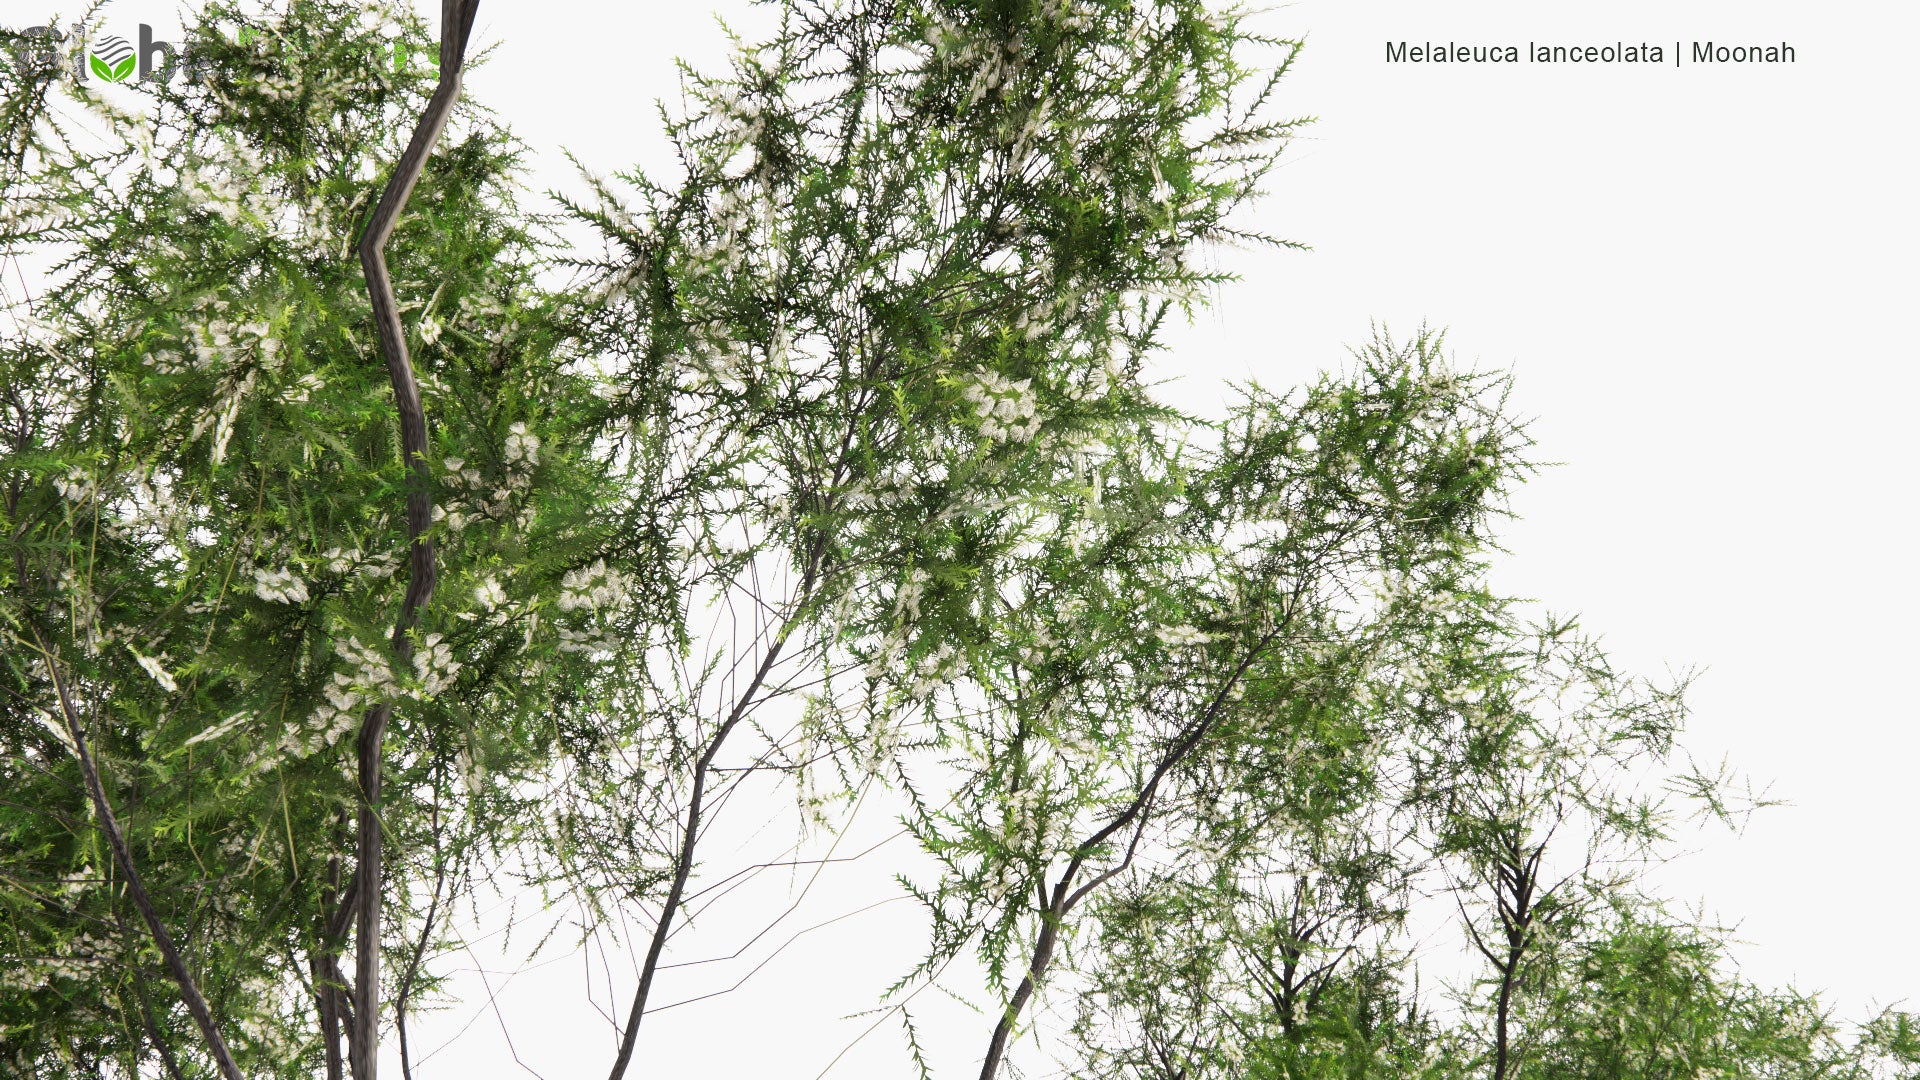 Low Poly Melaleuca Lanceolata - Moonah (3D Model)